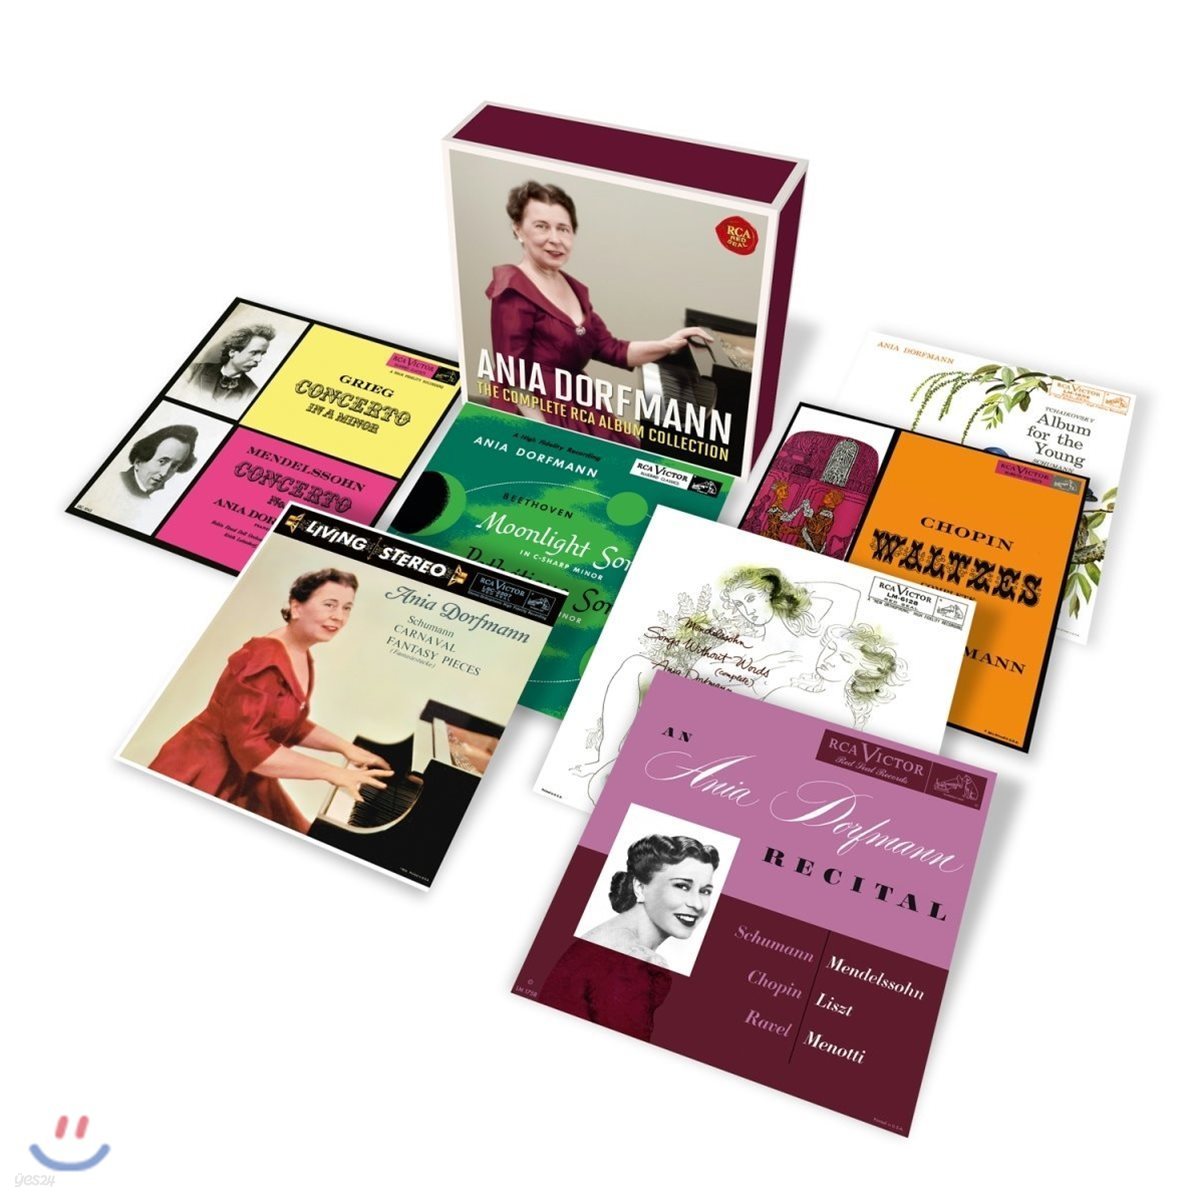 Ania Dorfmann 애니아 도르프만 - RCA 빅터 레코딩 전집 (The Complete RCA Victor Recordings)